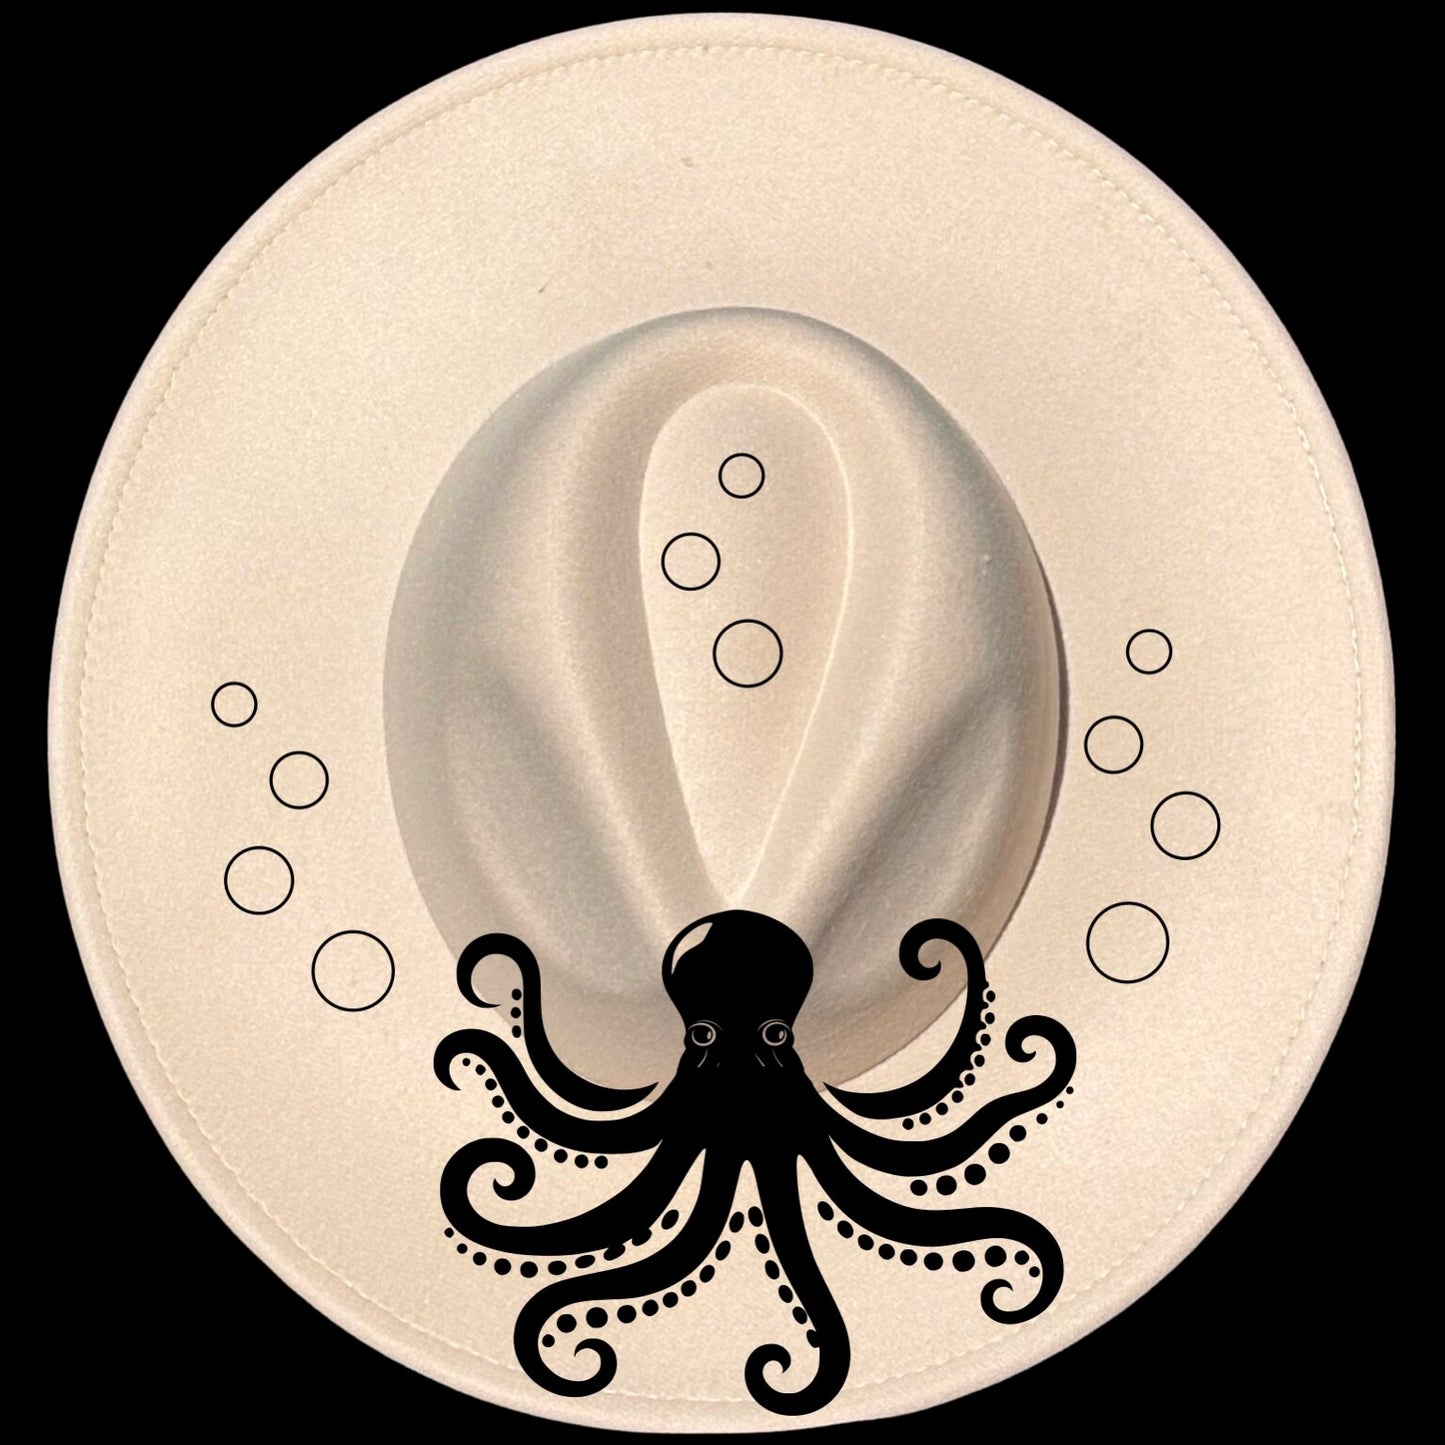 Octopus design on a wide brim hat